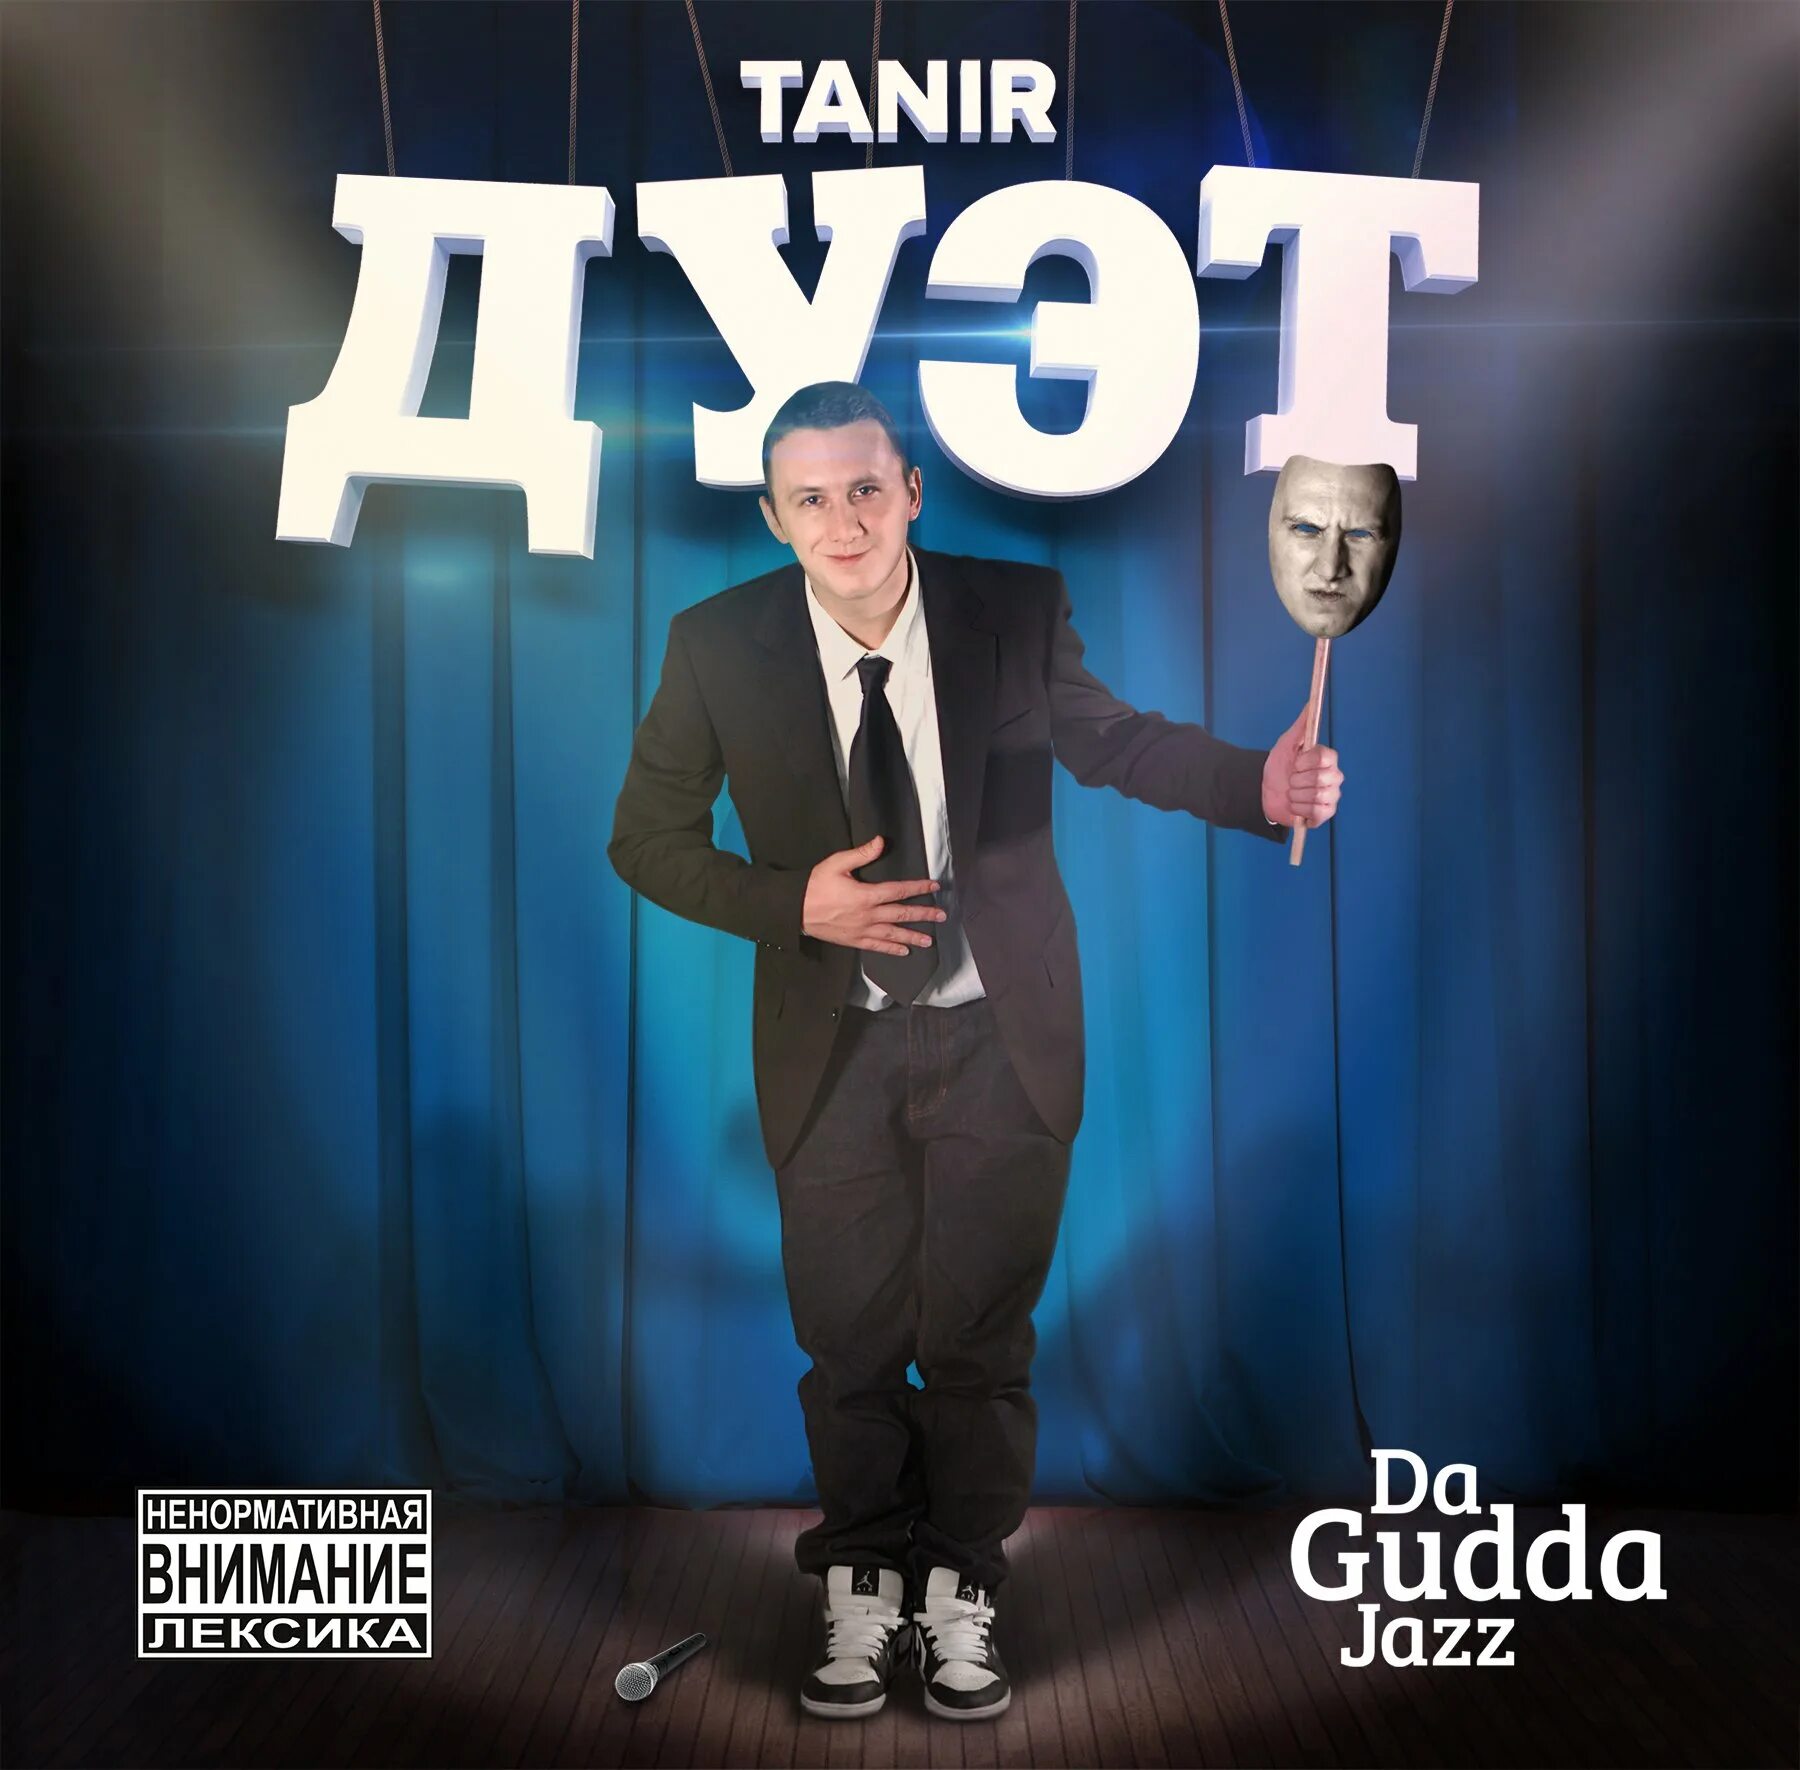 Tanir. Tanir da Gudda. Танир дуэт альбом.